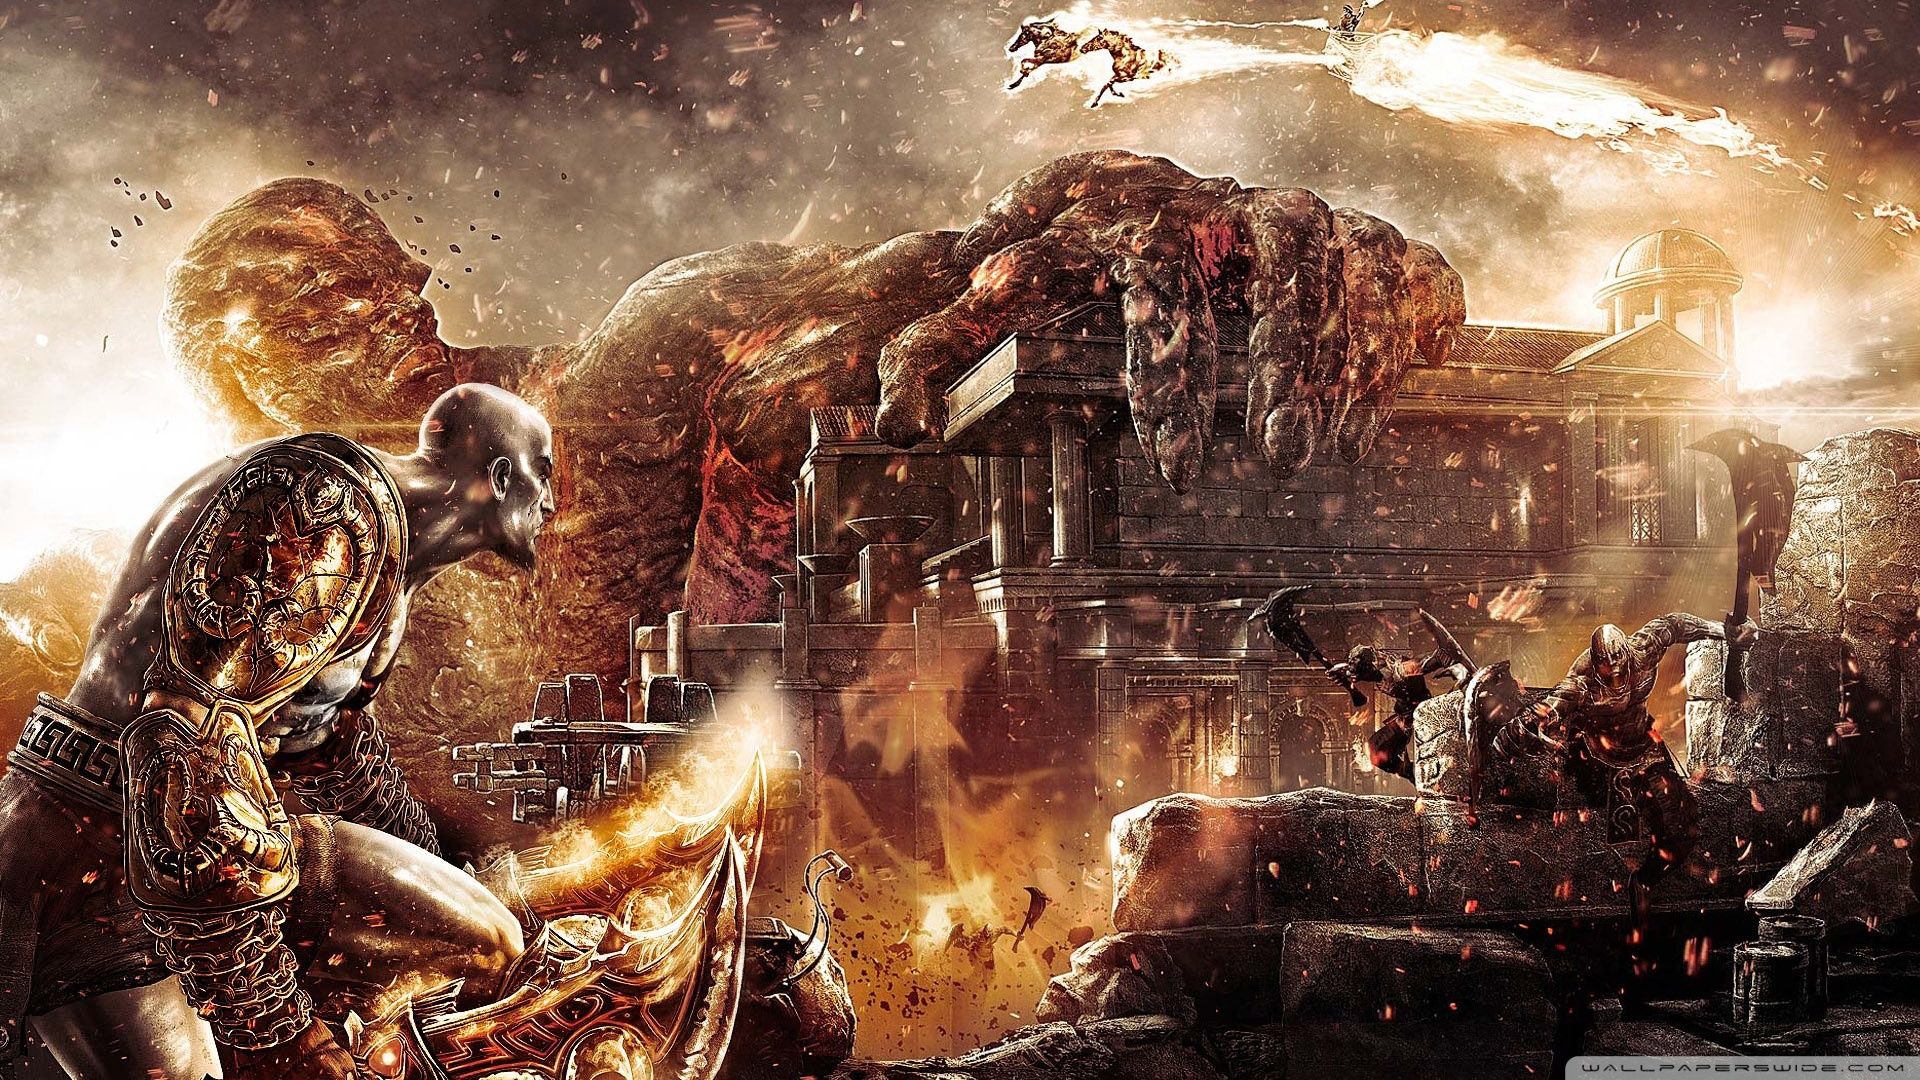 God Of War 3 HD Wallpaper 1080p Image Two